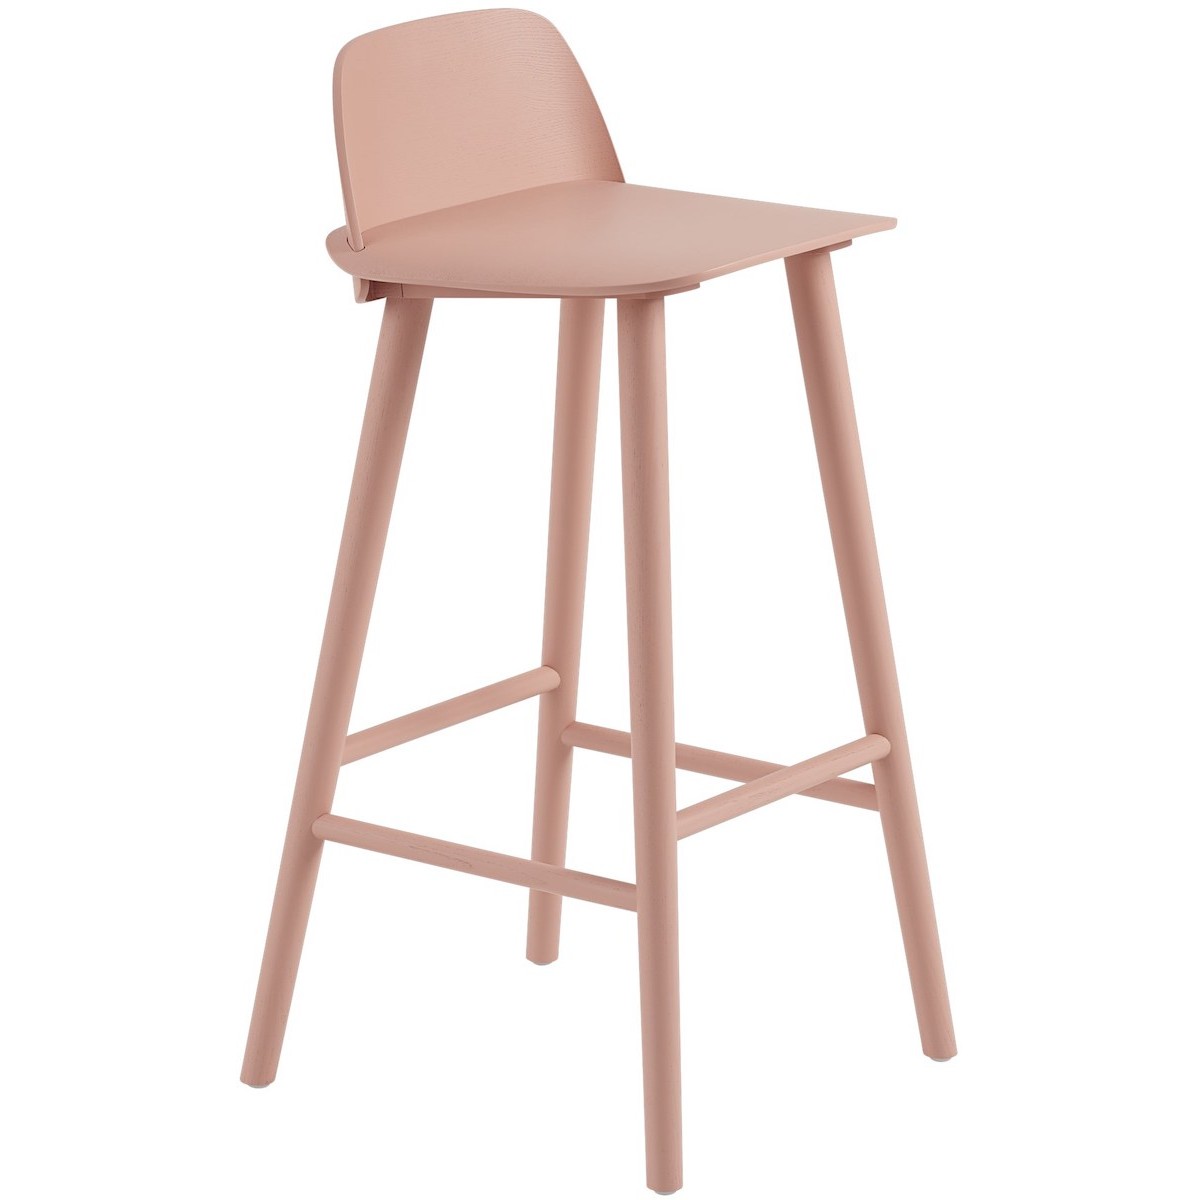 tan rose - Nerd bar or counter stool